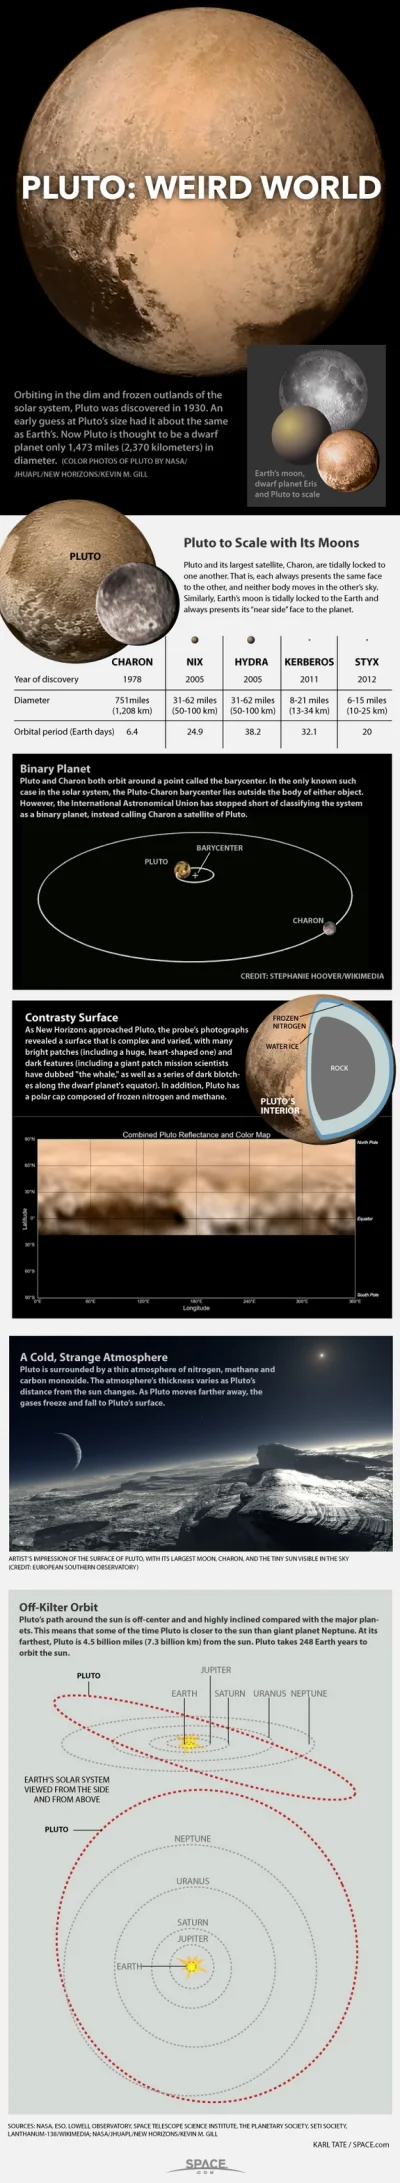 vforvendetta - Pluto spamu nigdy mało - infografika na temat tej planety (karłowatej ...